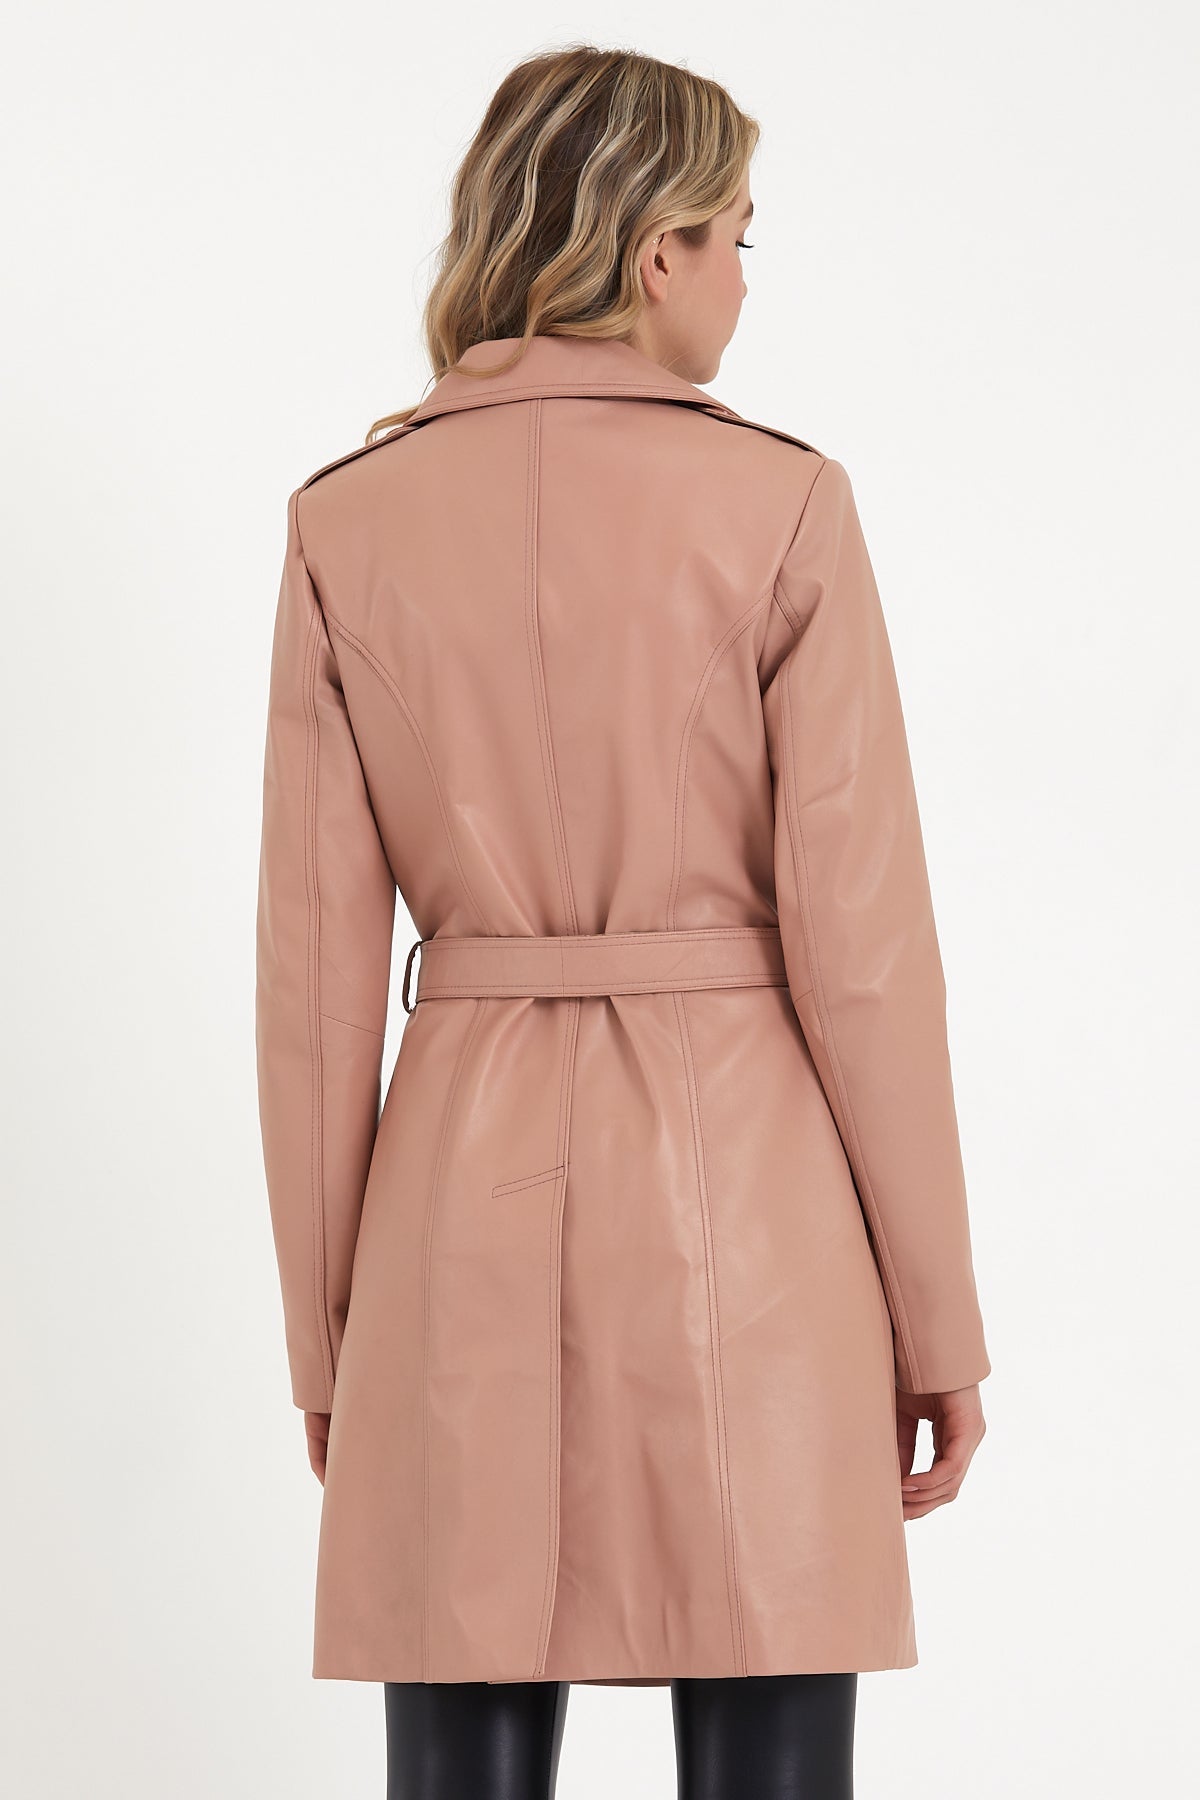 Women's leather trench coat